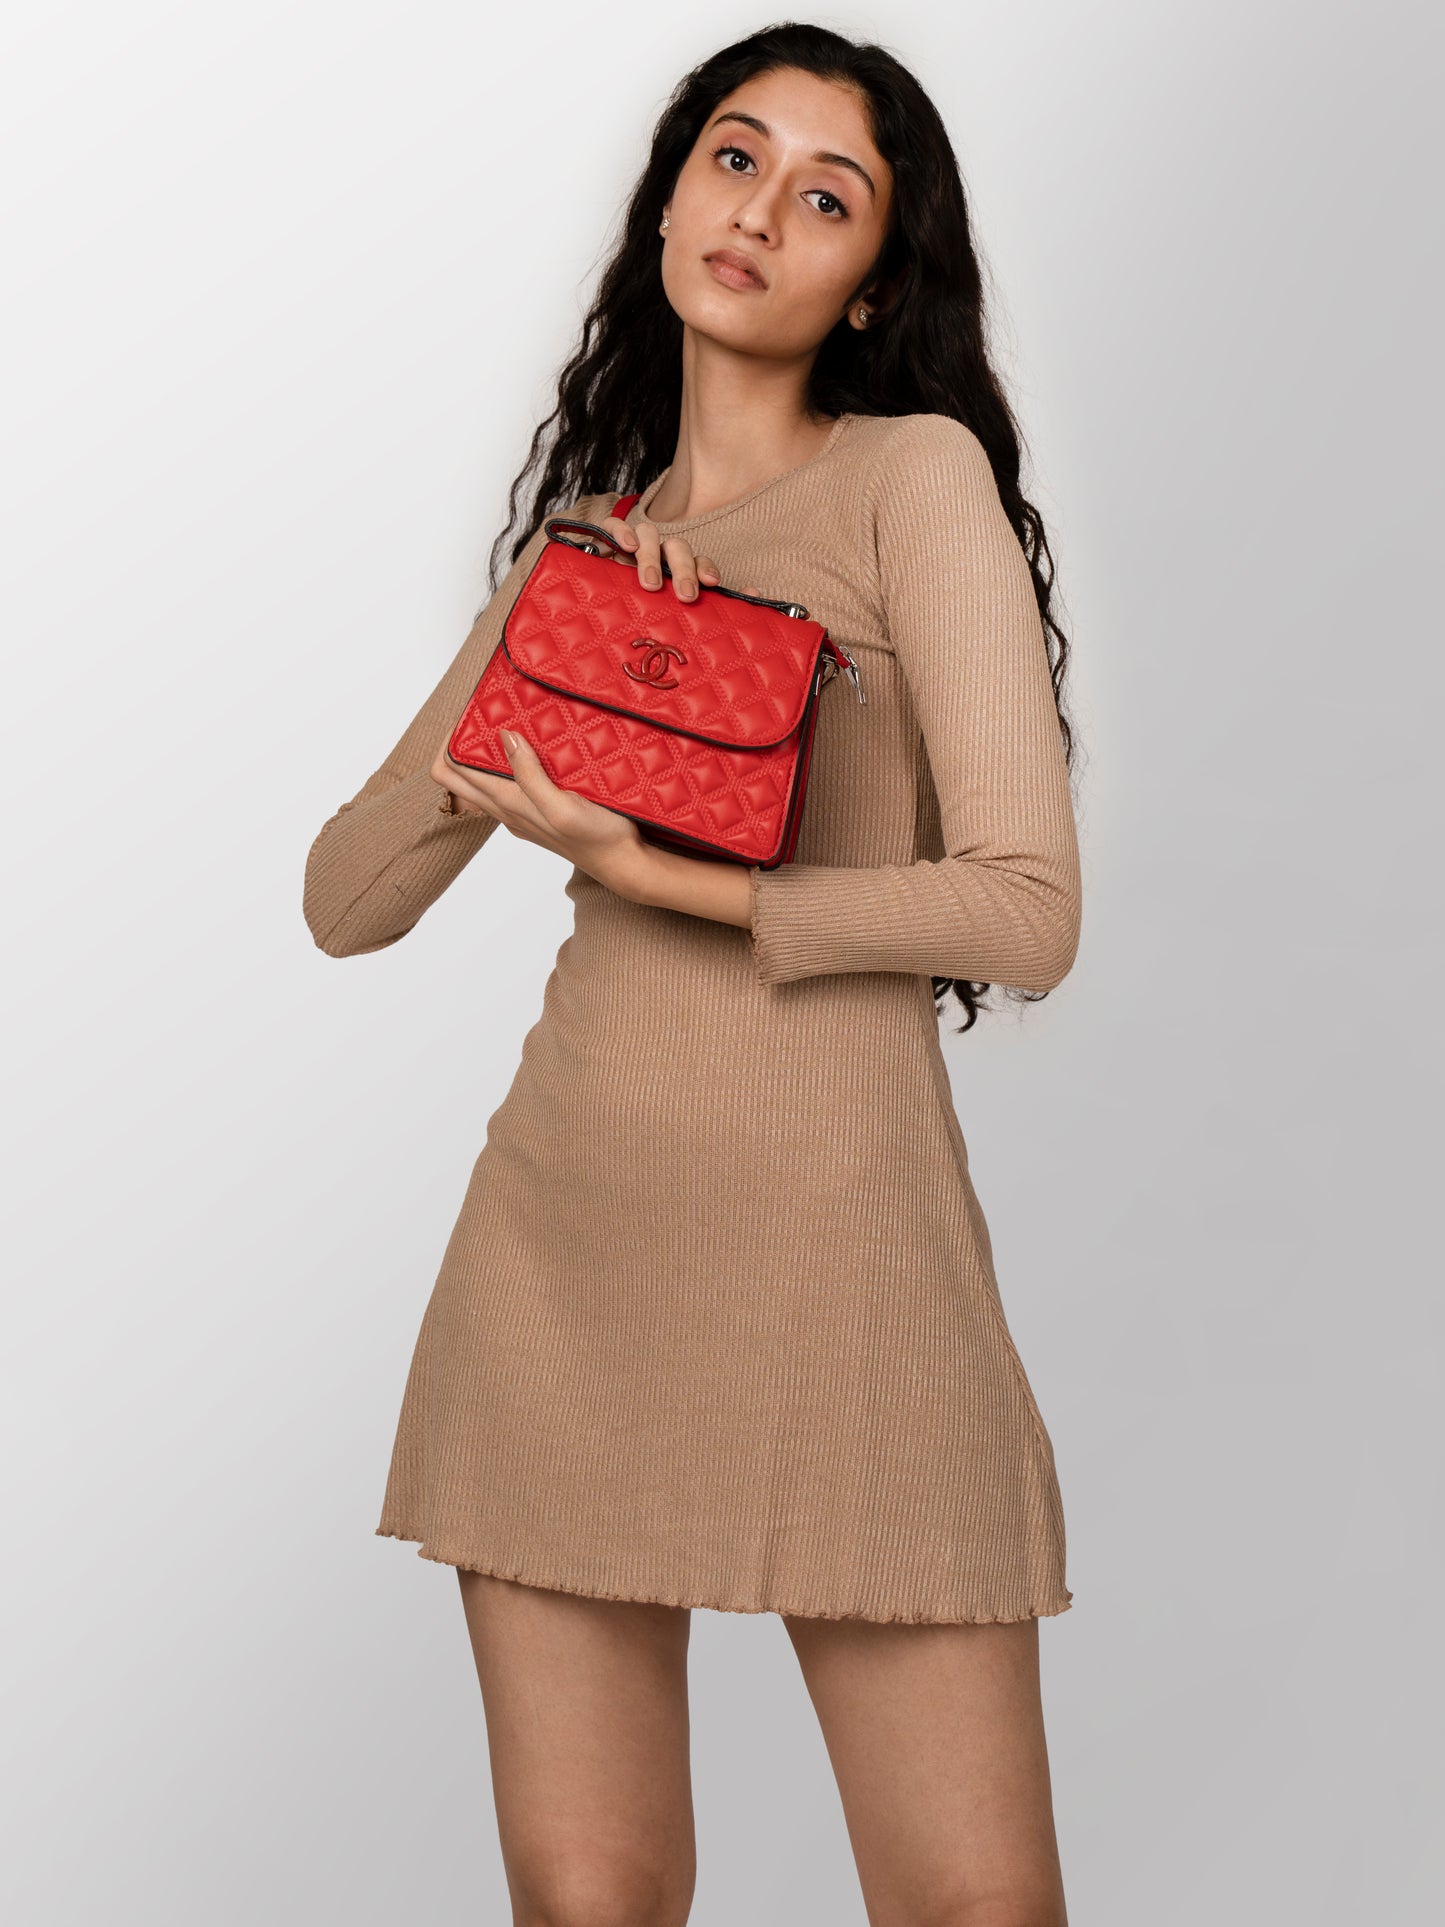 Women red textured fashion bag